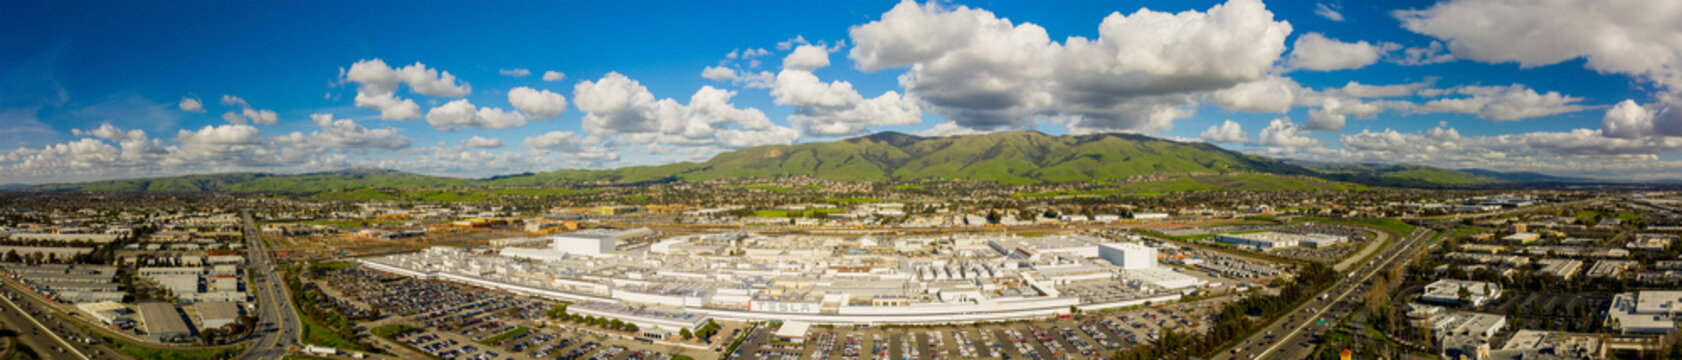 Tesla factory Fremont California USA panorama photo